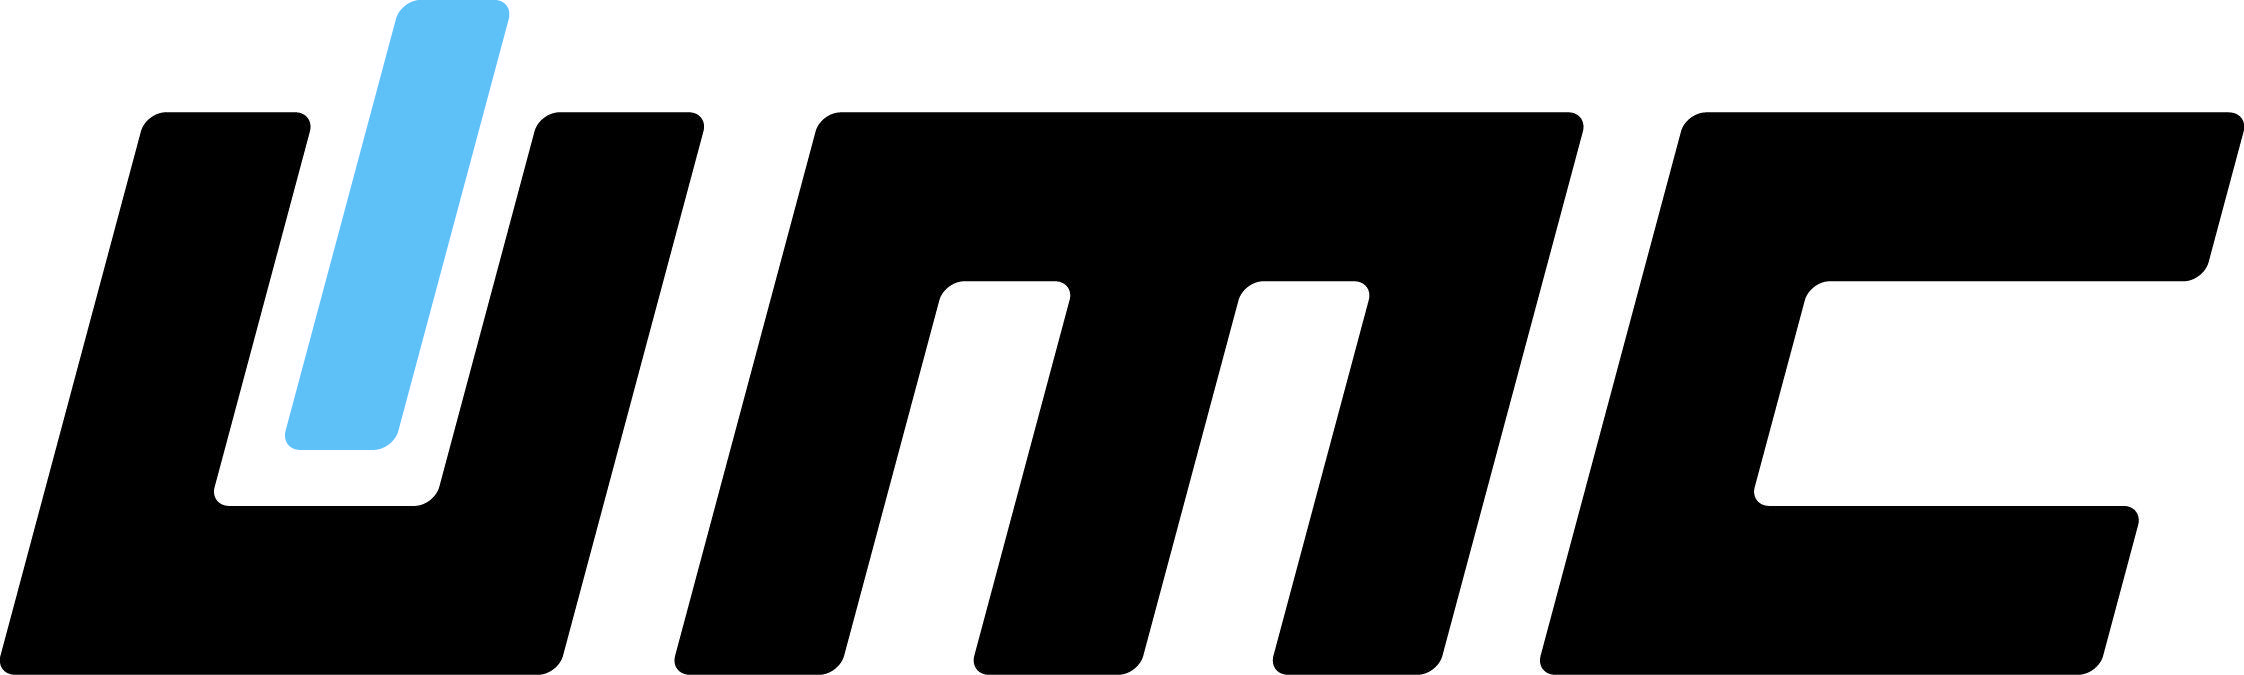 UMC Logo - UMC